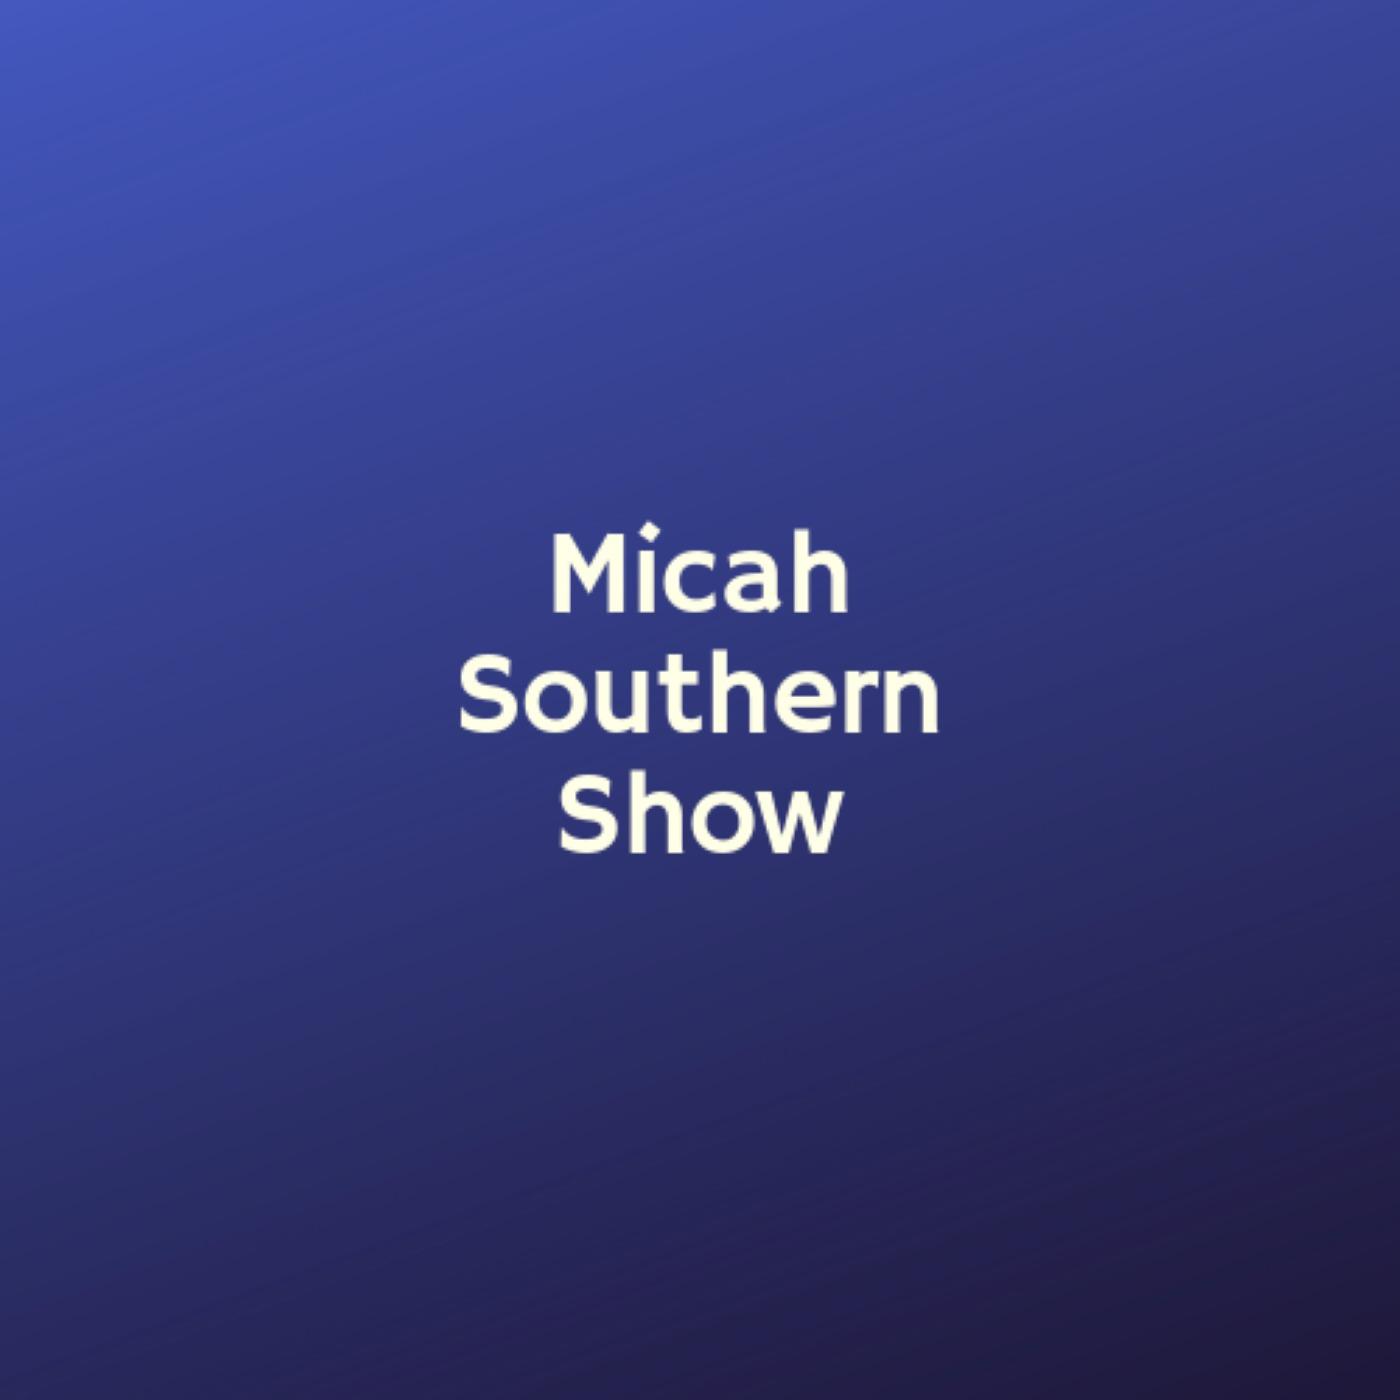 Micah Southern Show